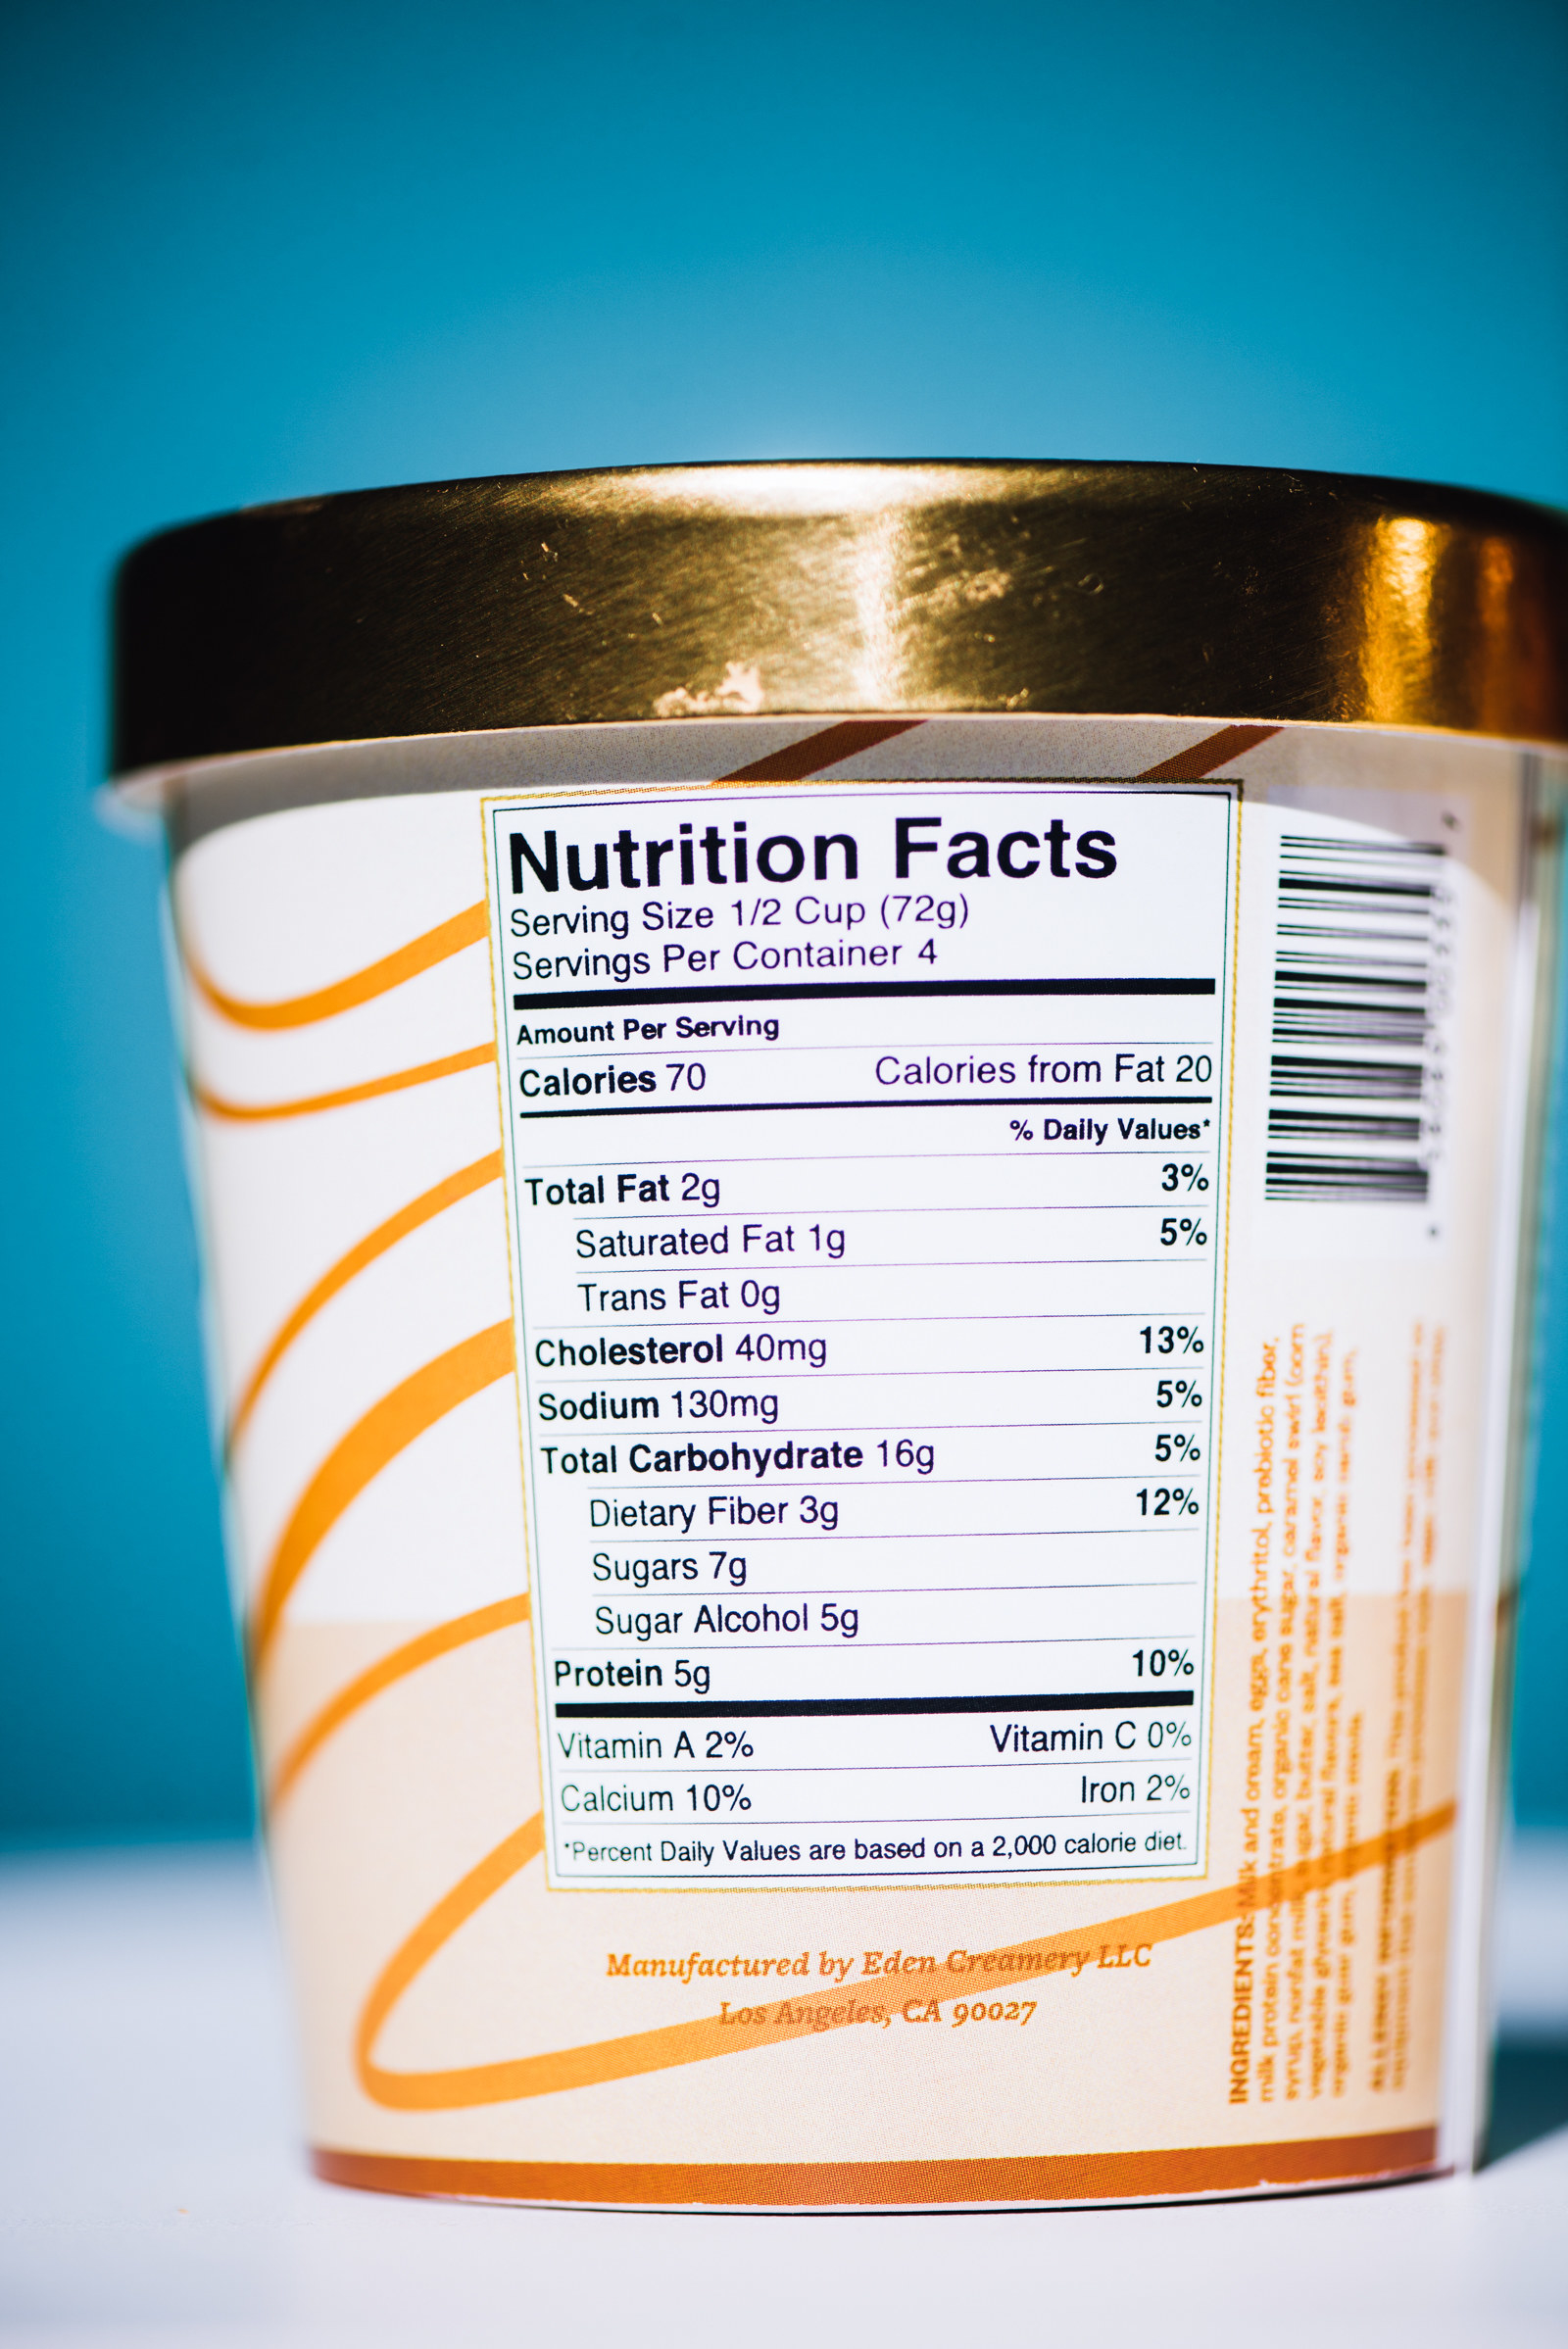 32 Halo Top Nutrition Label - Label Design Ideas 2020